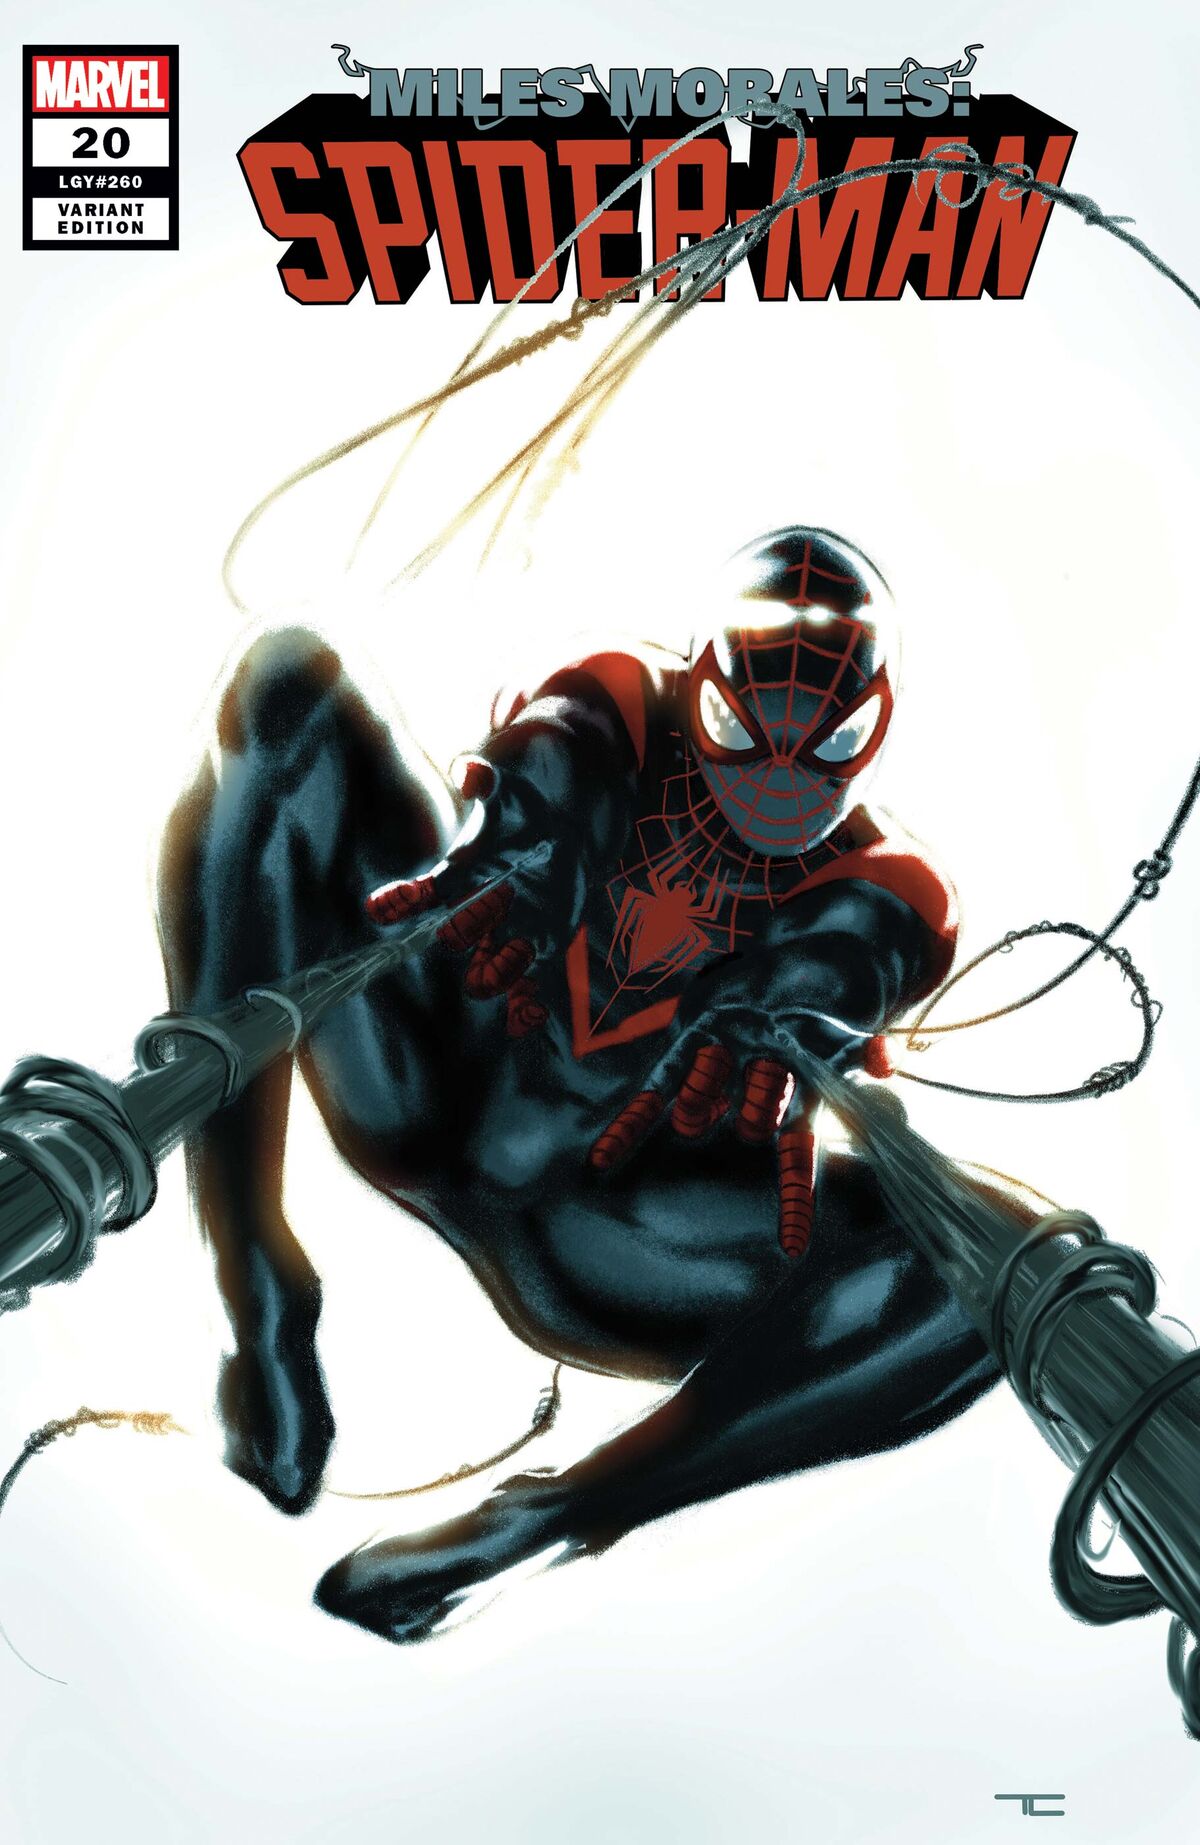 Miles Morales: Spider-Man Vol 1 20 | Marvel Database | Fandom